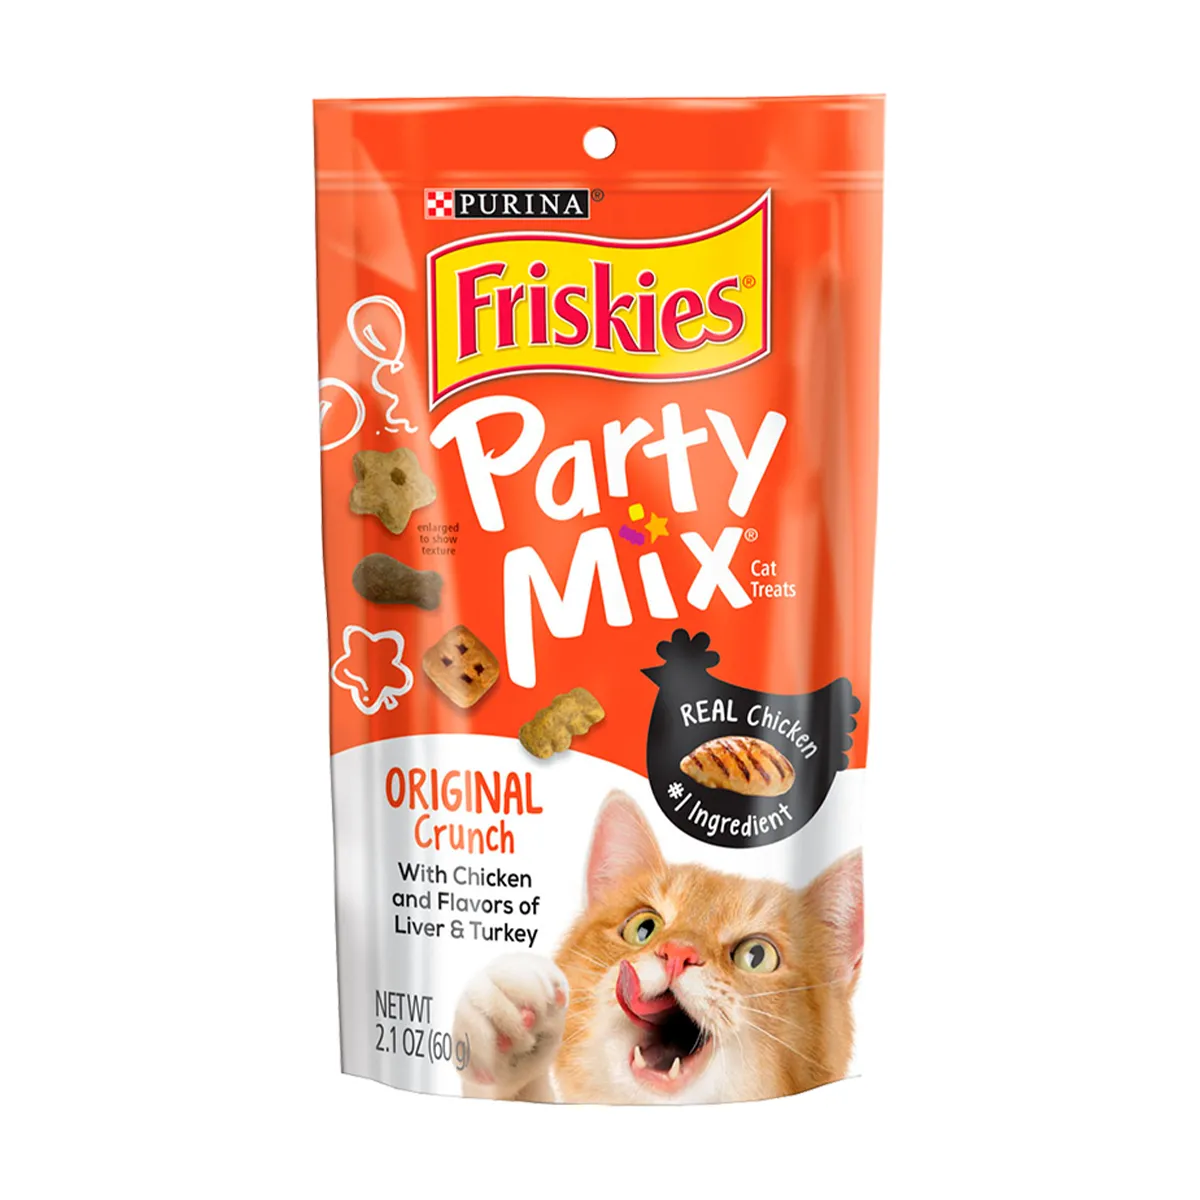 Purina Friskies Party Mix Original Crunch.jpg